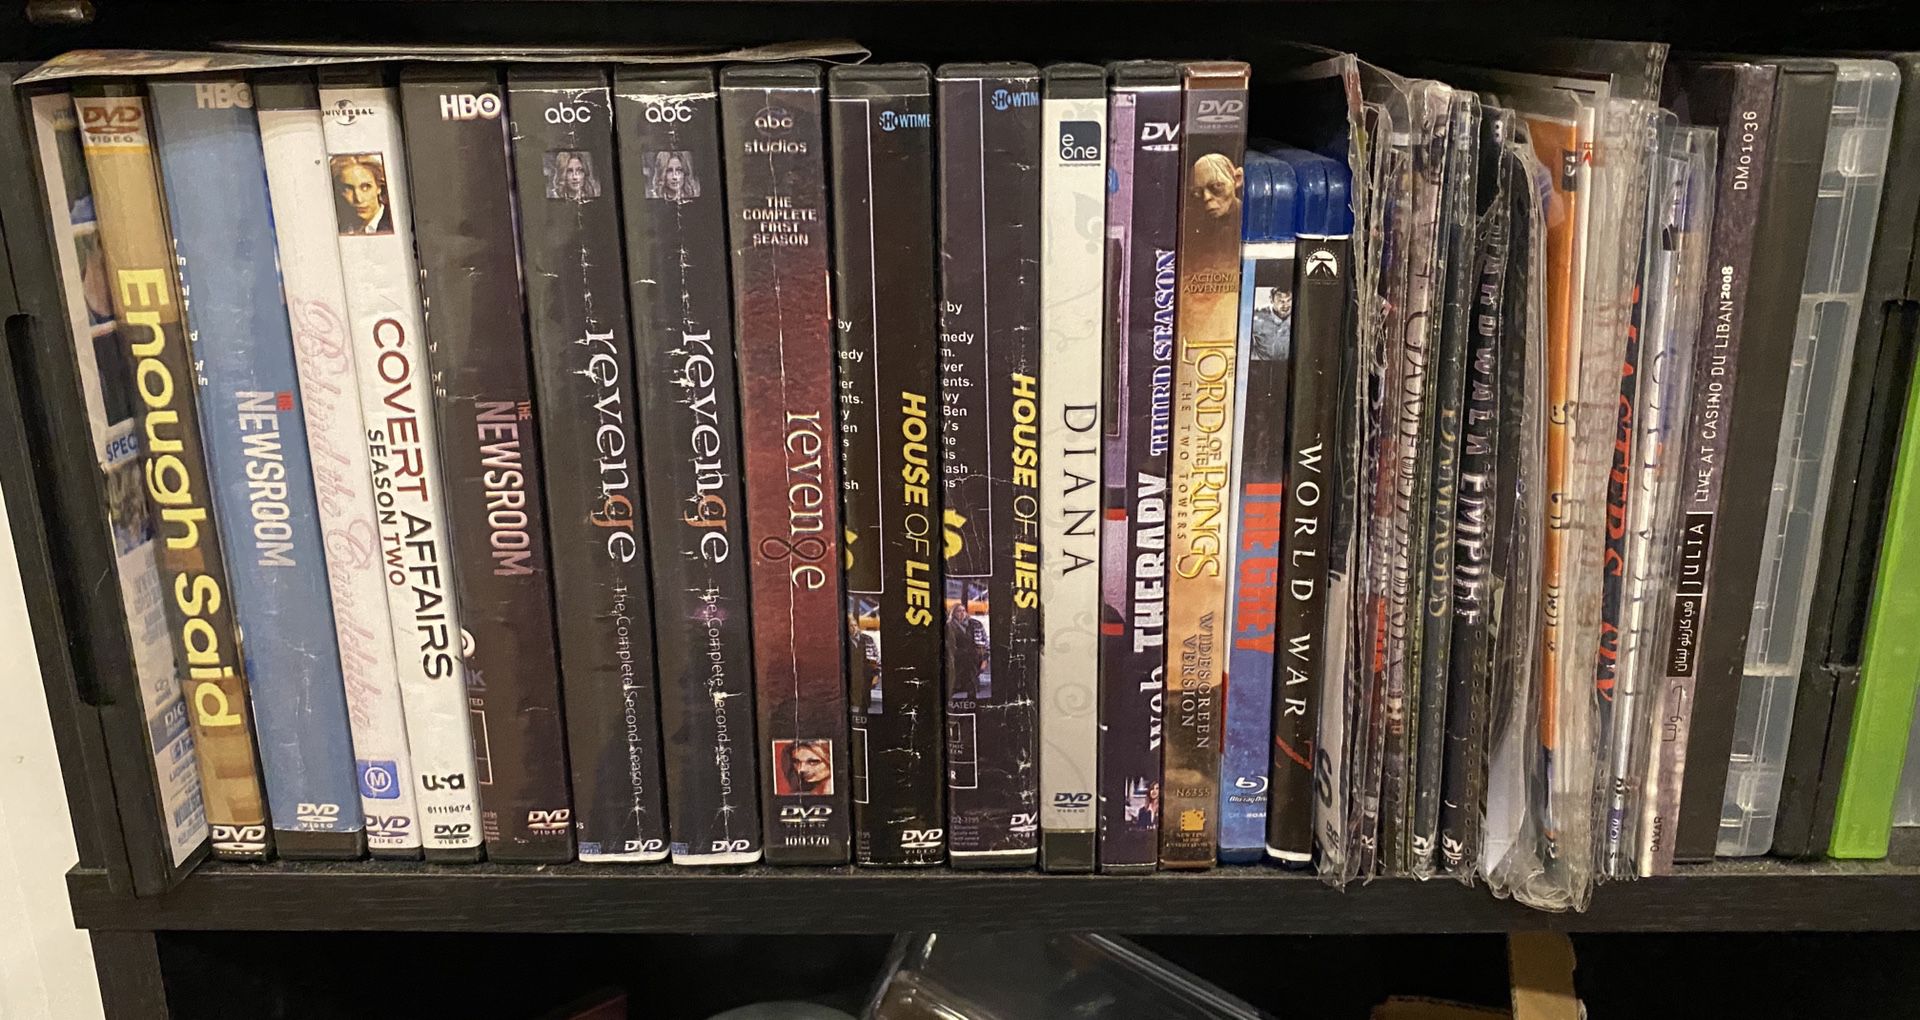 Free DVDs of premium series